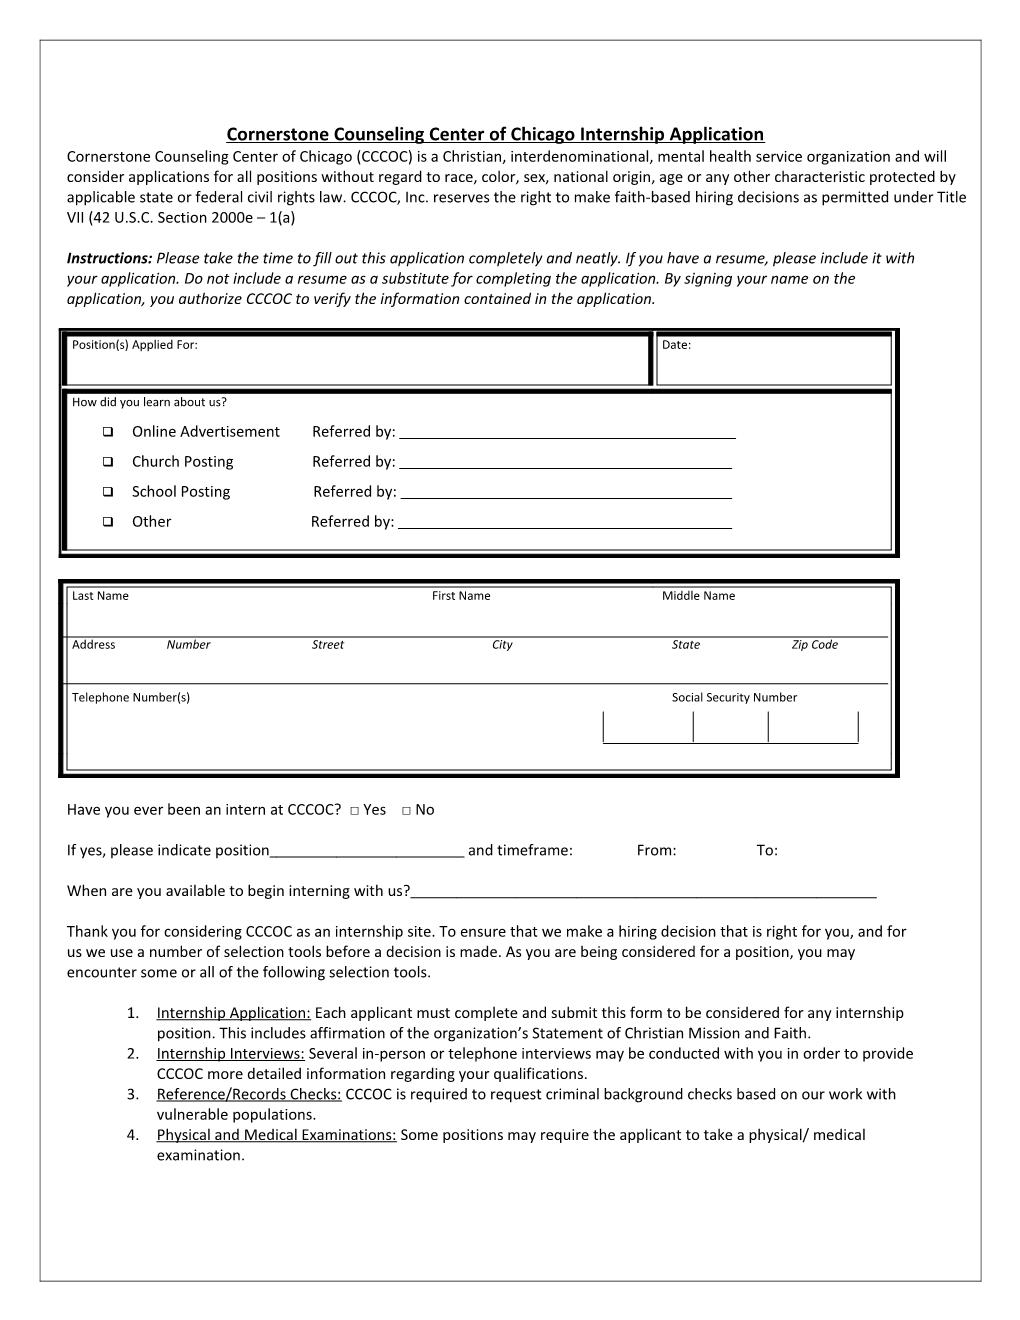 Cornerstone Counseling Center of Chicago Internship Application